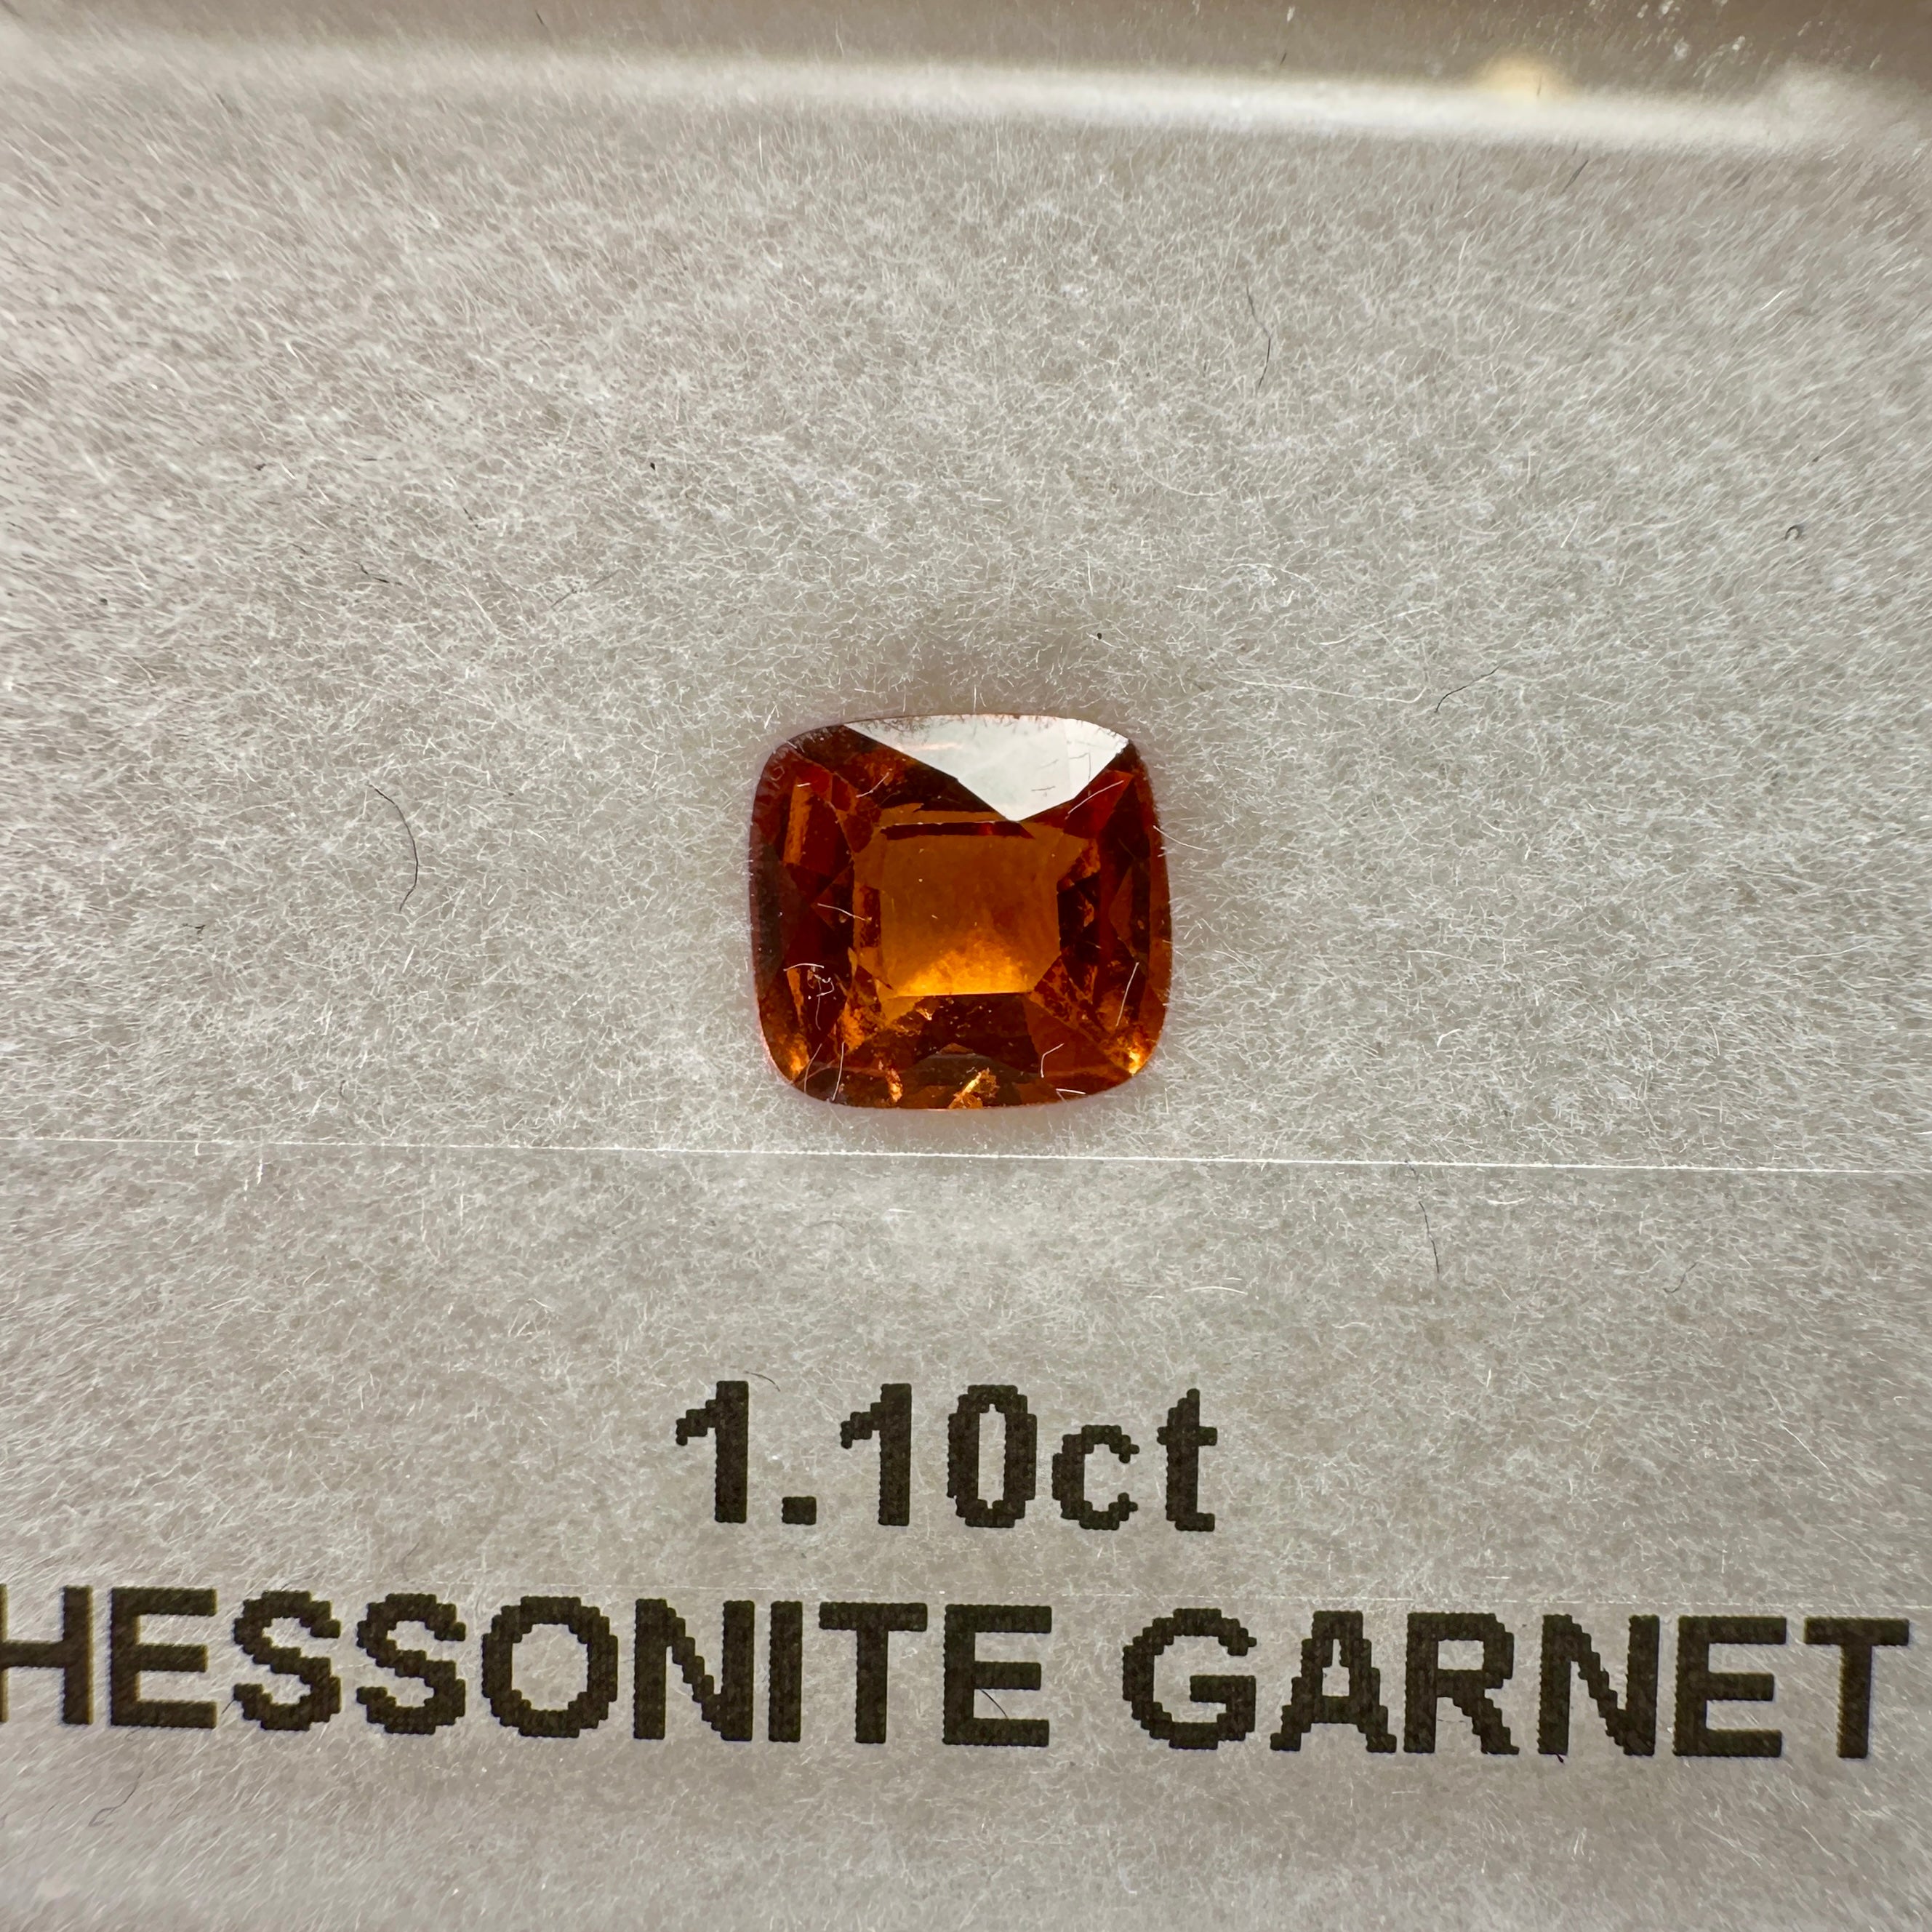 1.10ct Hessonite Garnet, Untreated Unheated, native cut